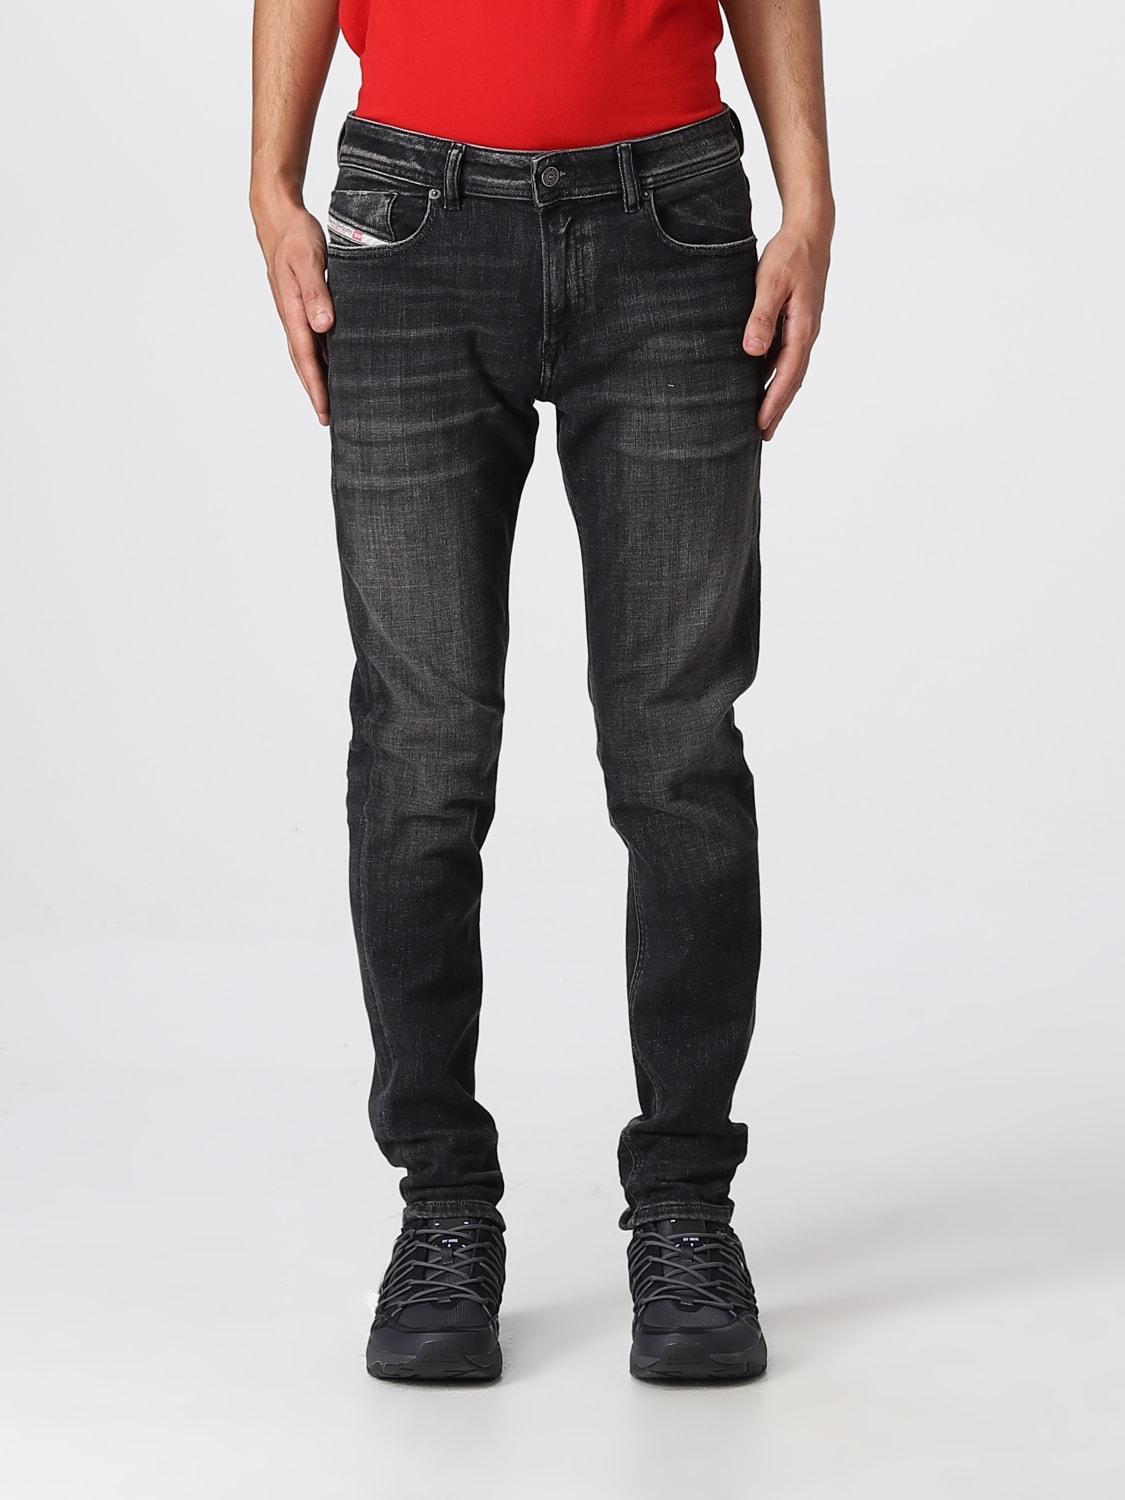 DIESEL: jeans for man - Black Diesel jeans A0359509D88 online on